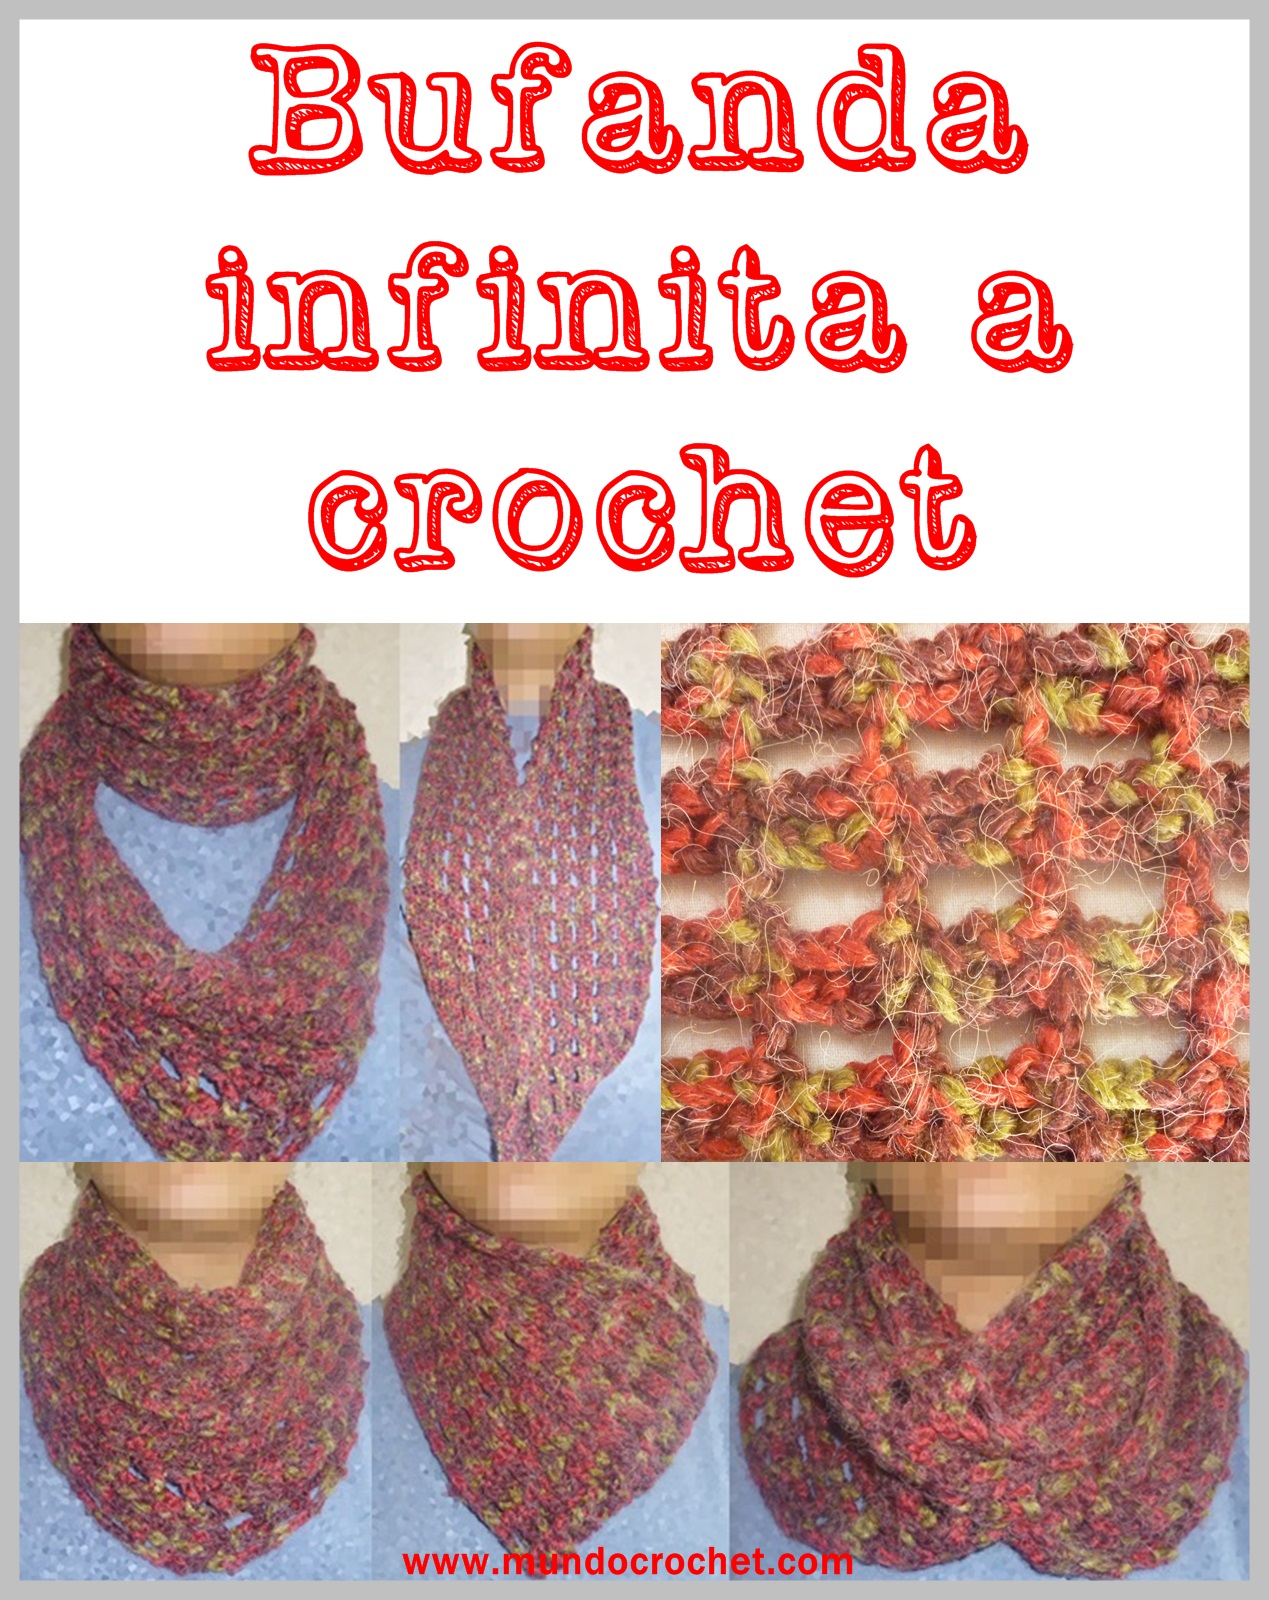 Bufanda crochet/ganchillo